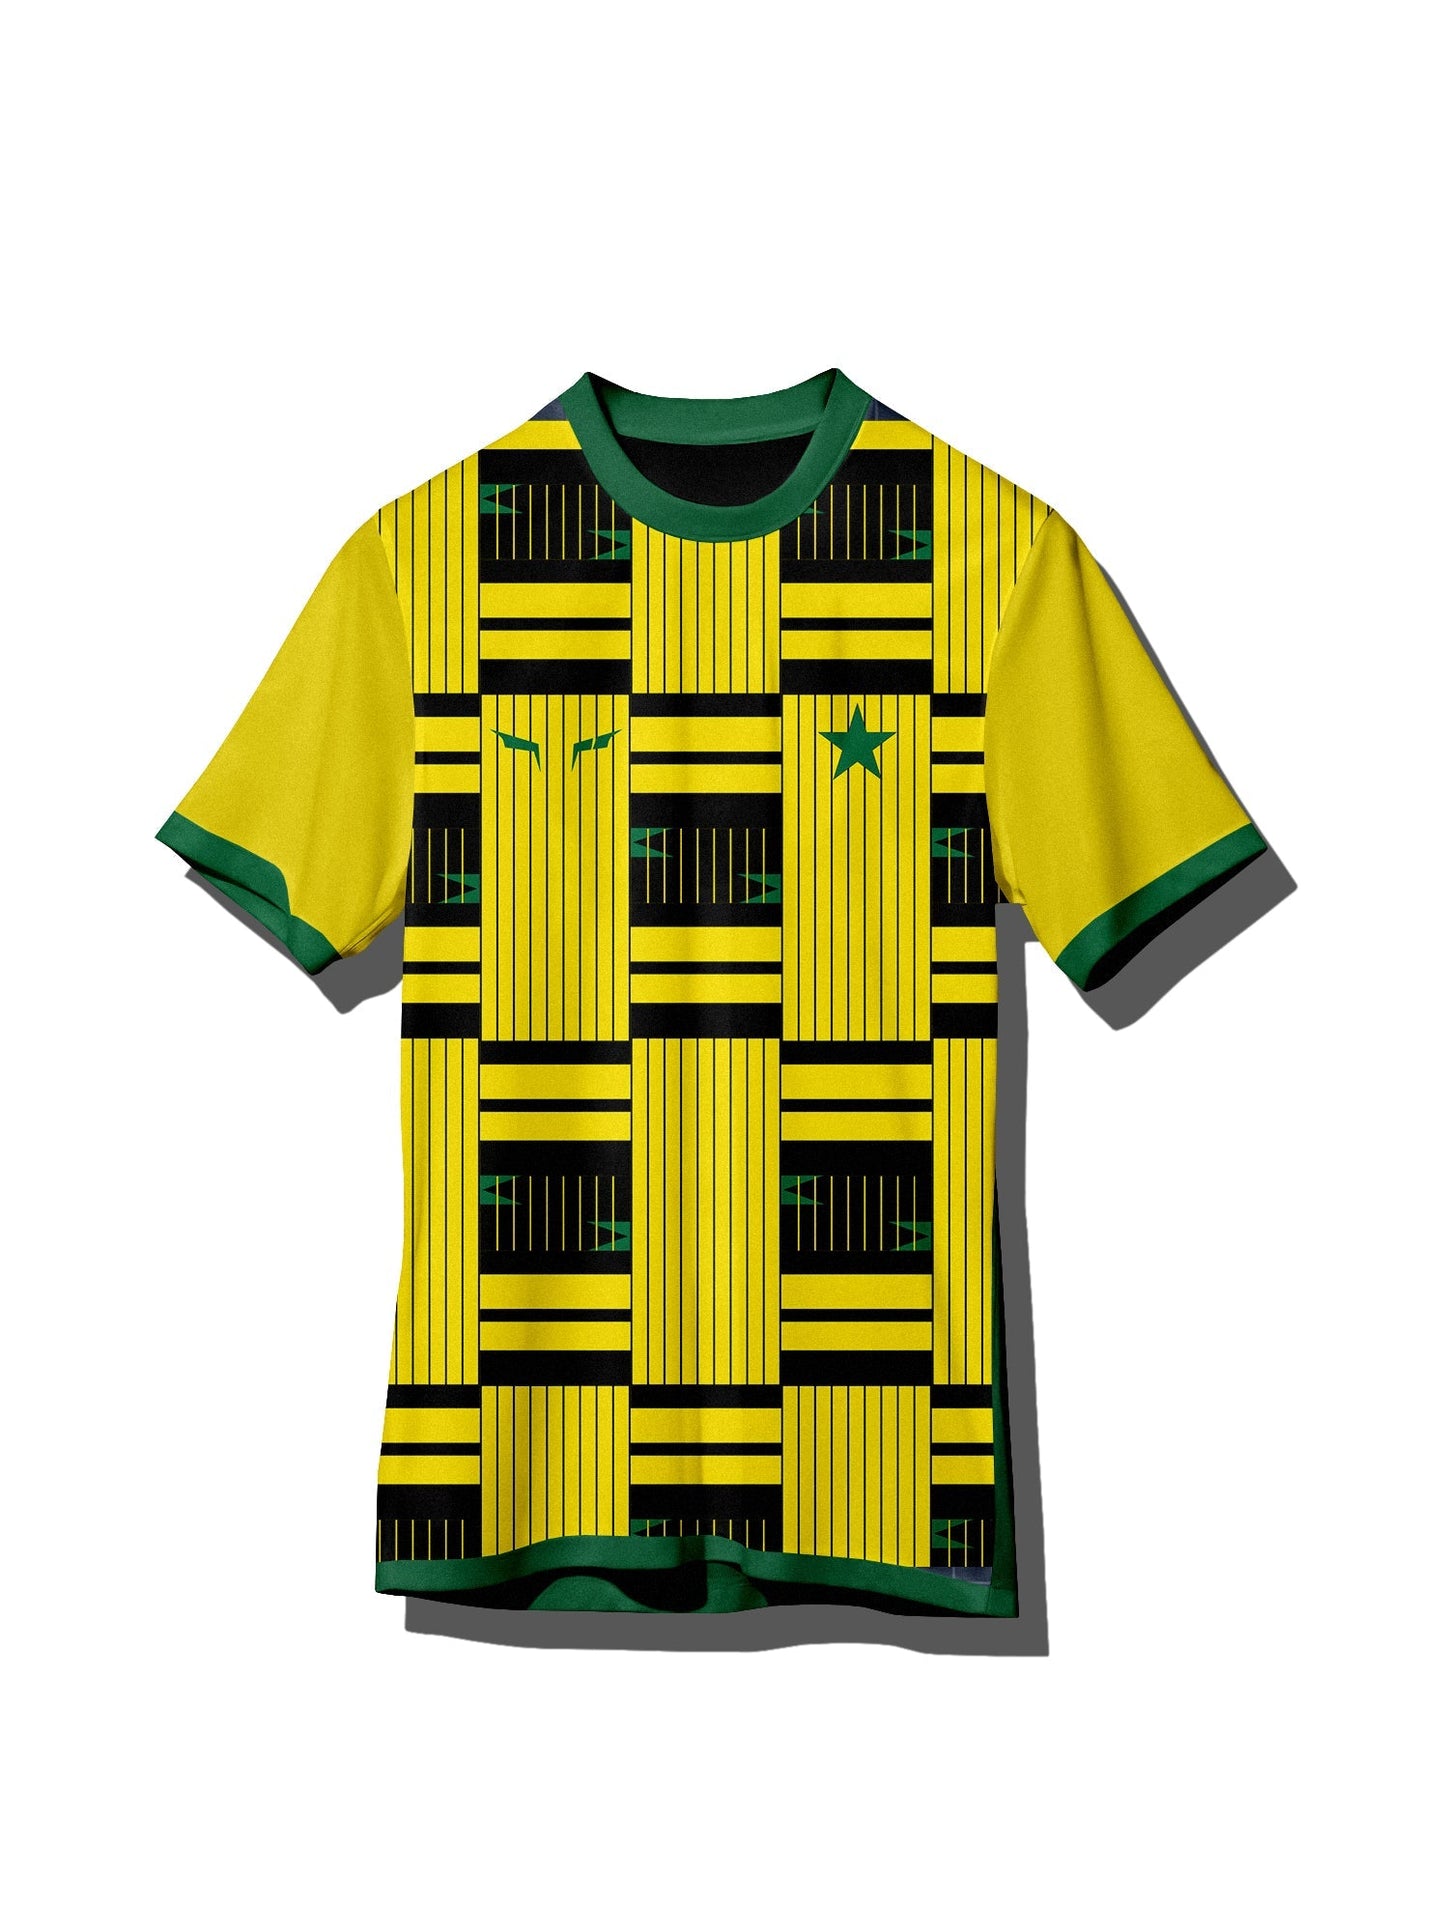 Ultras Ghana 93' Yellow Concept Football Jersey Kit